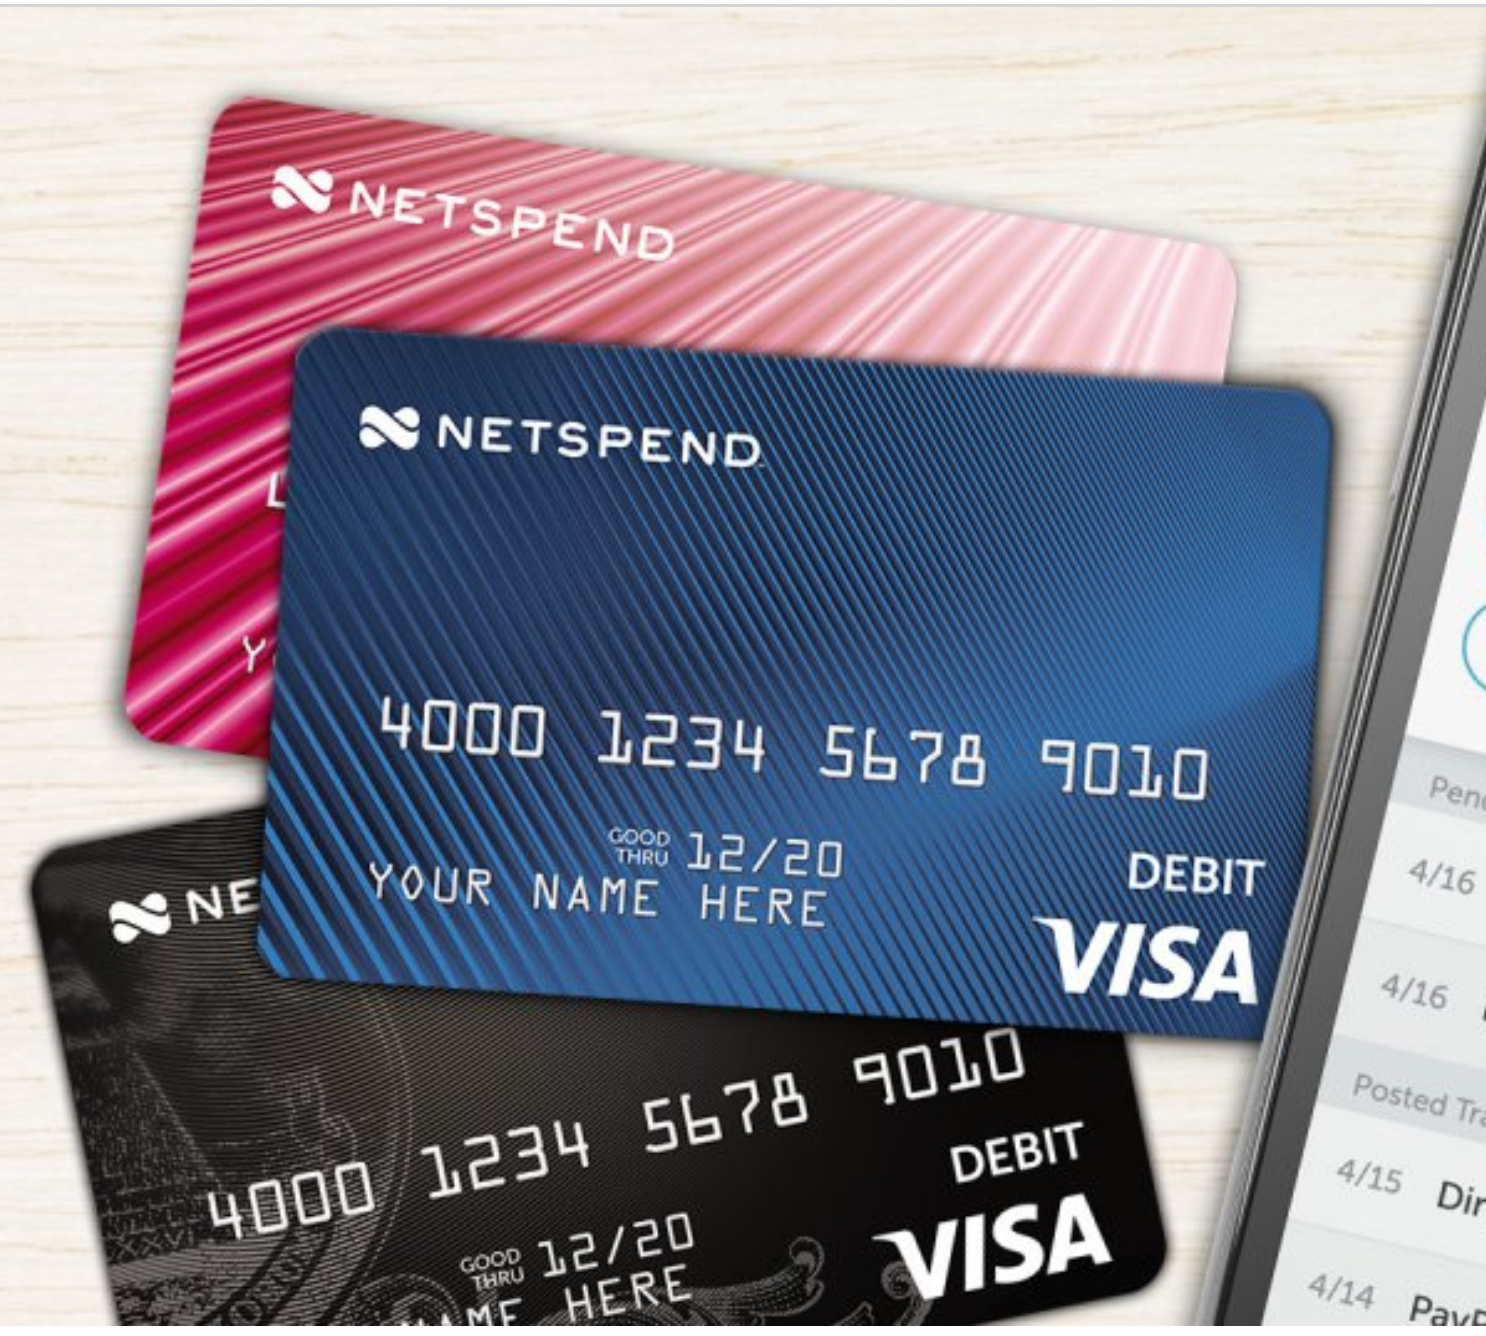 NetSpend Prepaid MasterCard - Benefits for NetSpend Cardholders